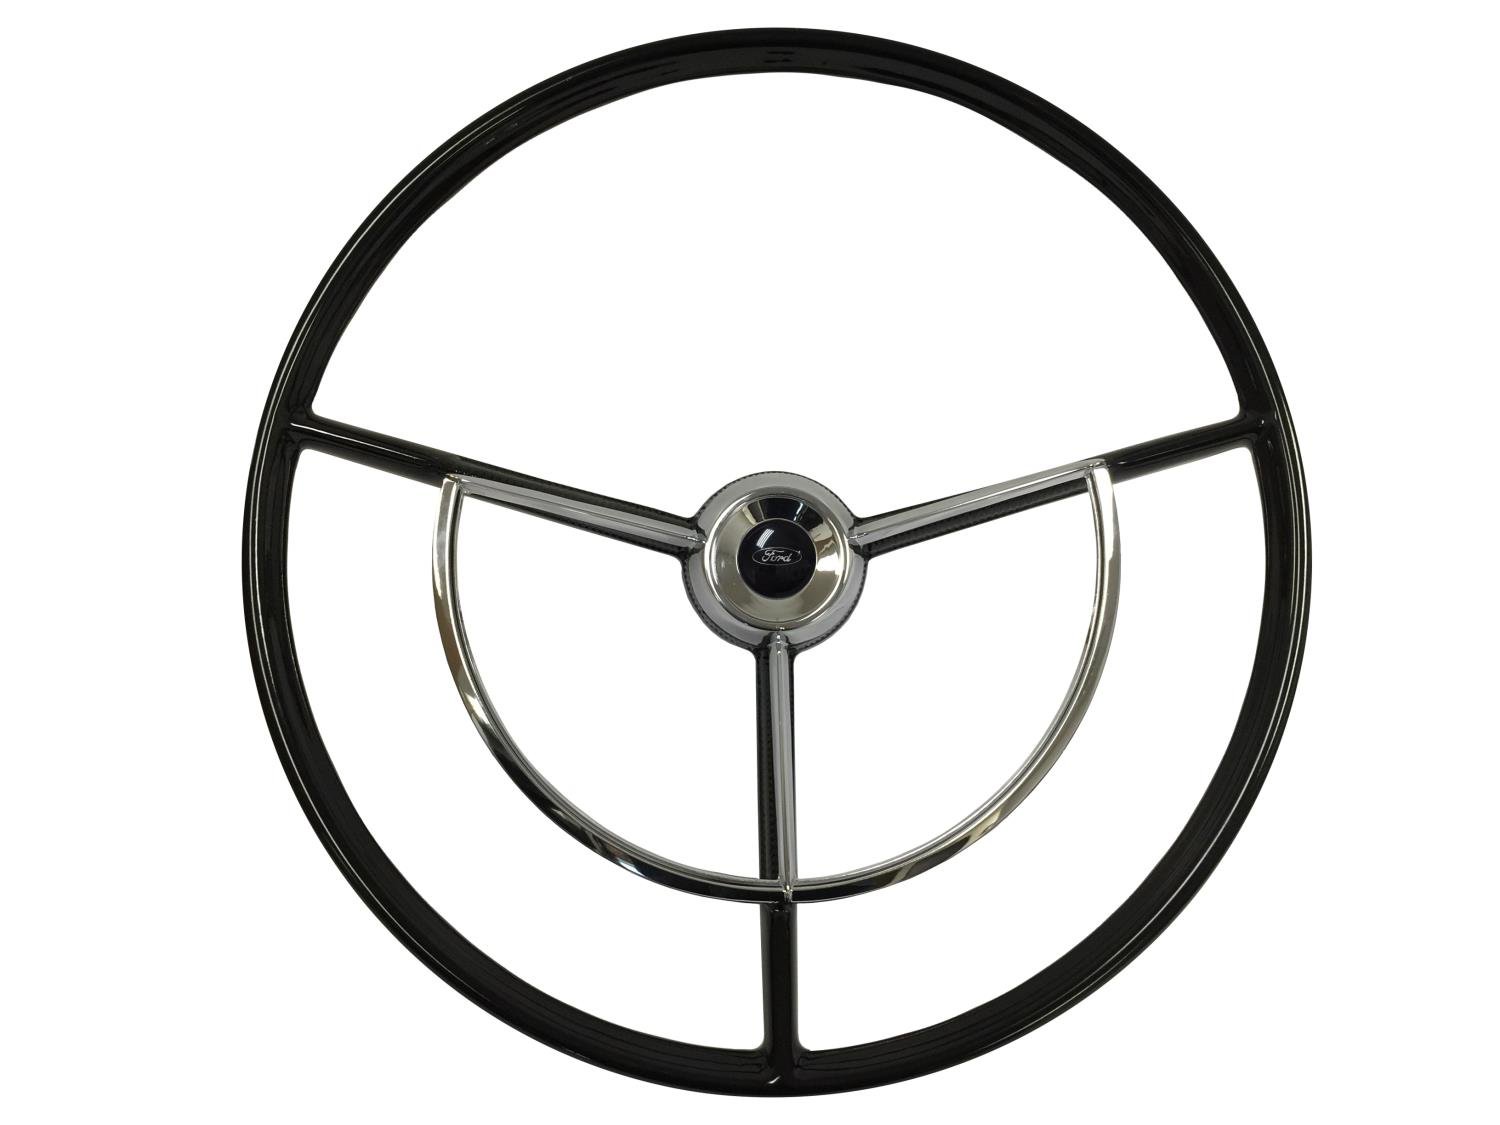 ST3006KITE58 OE-Series Steering Wheel Kit 1960-71 Classic Ford, 17 in. Diameter, Gloss Black Finish, w/ Horn Spring, Contact Kit